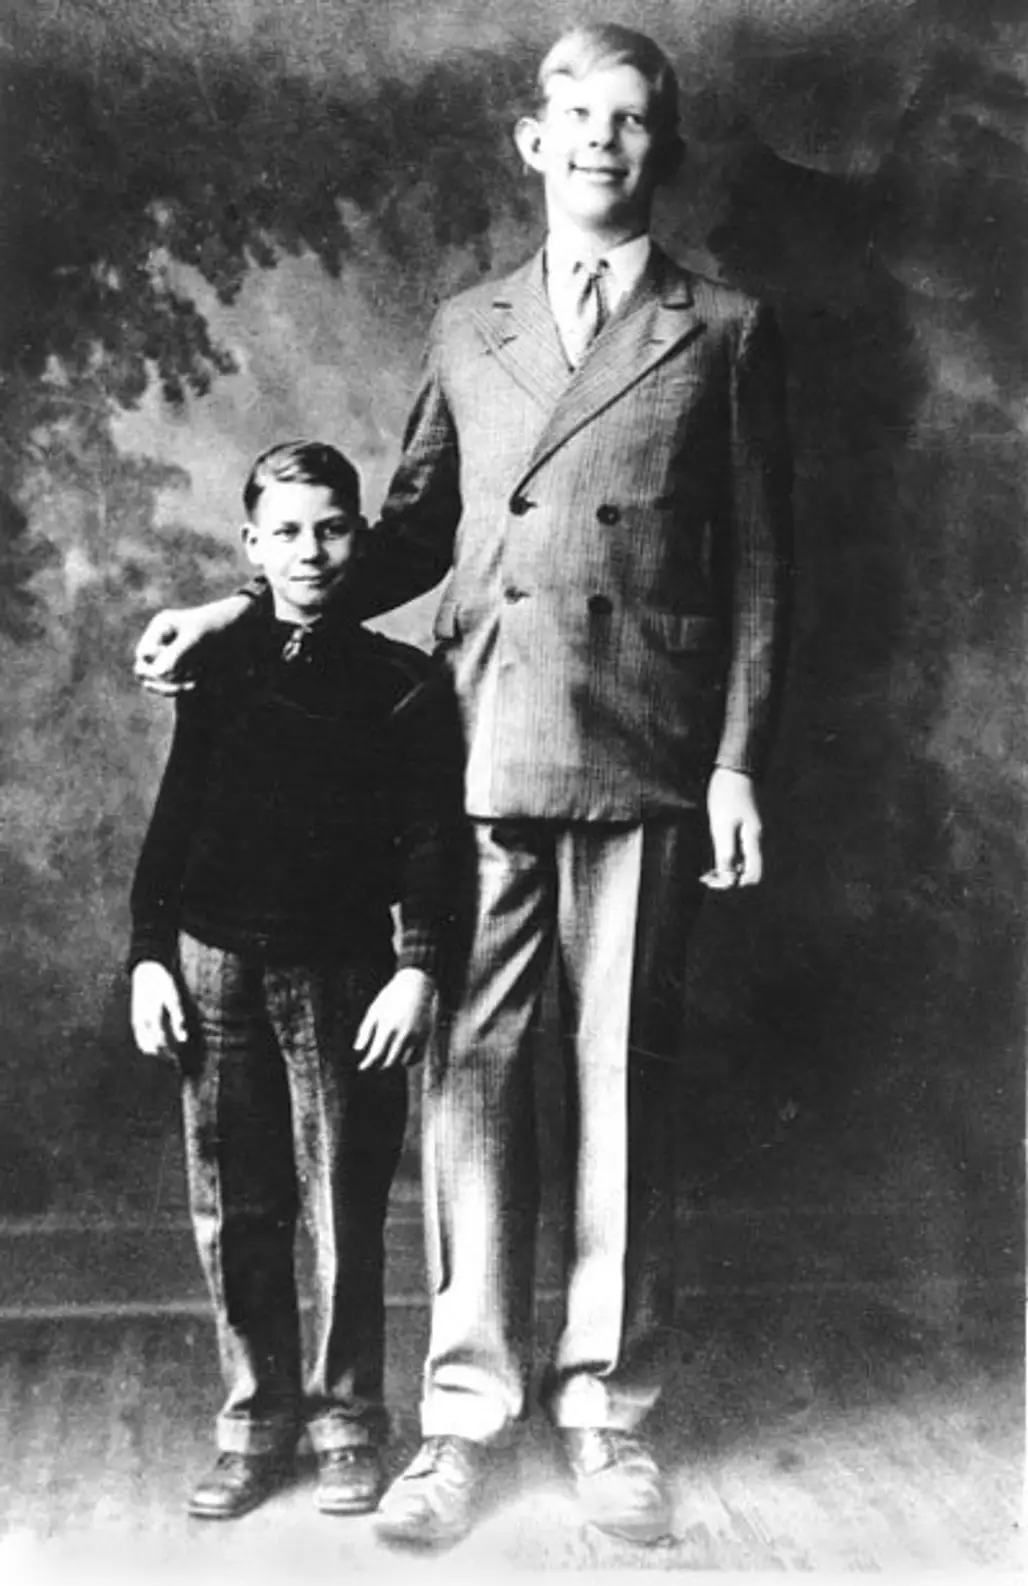 Taller than Dad